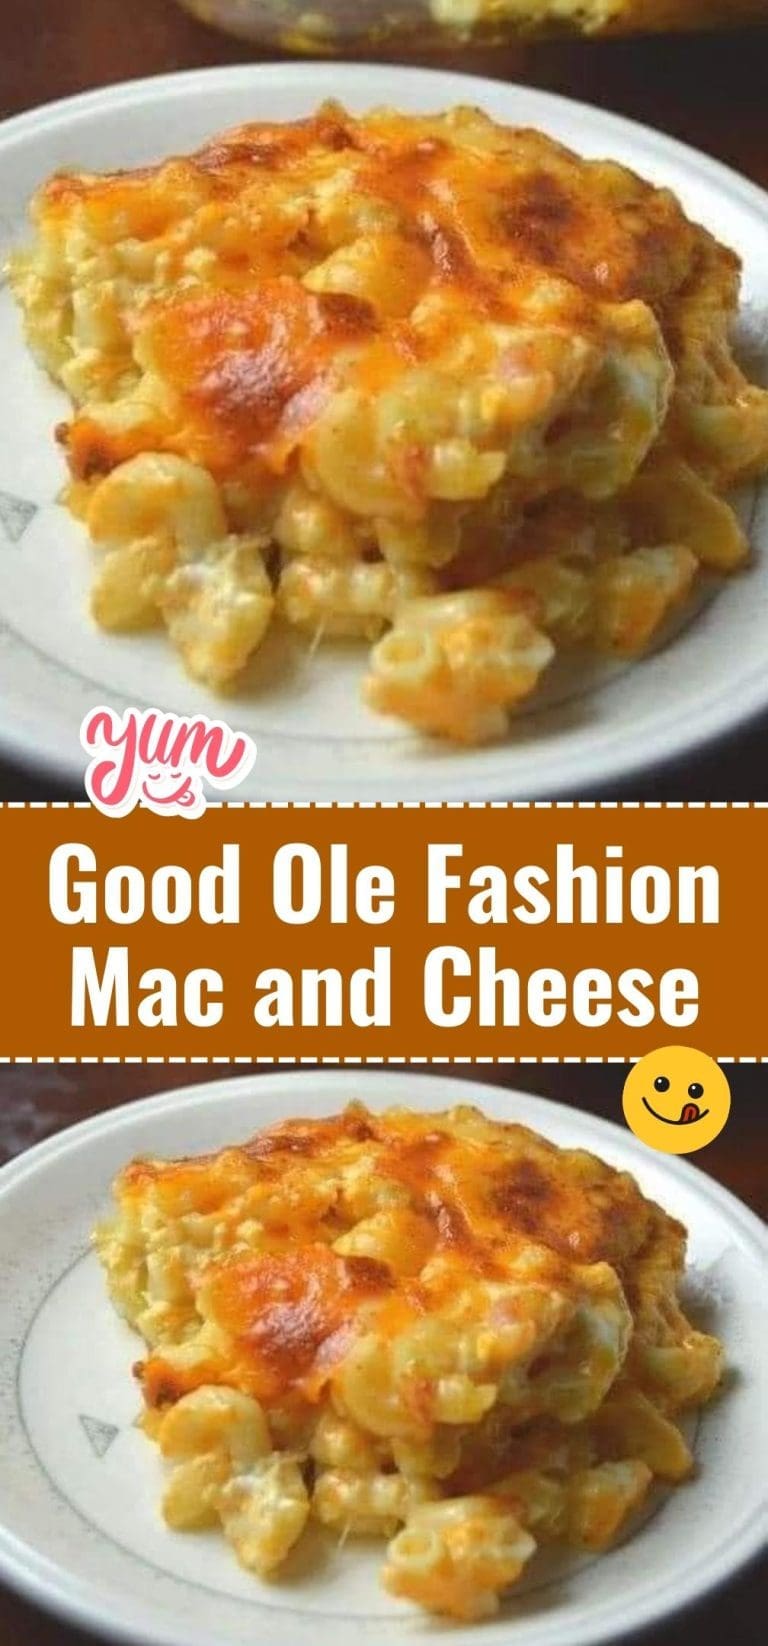 Good Ole Fashion Mac and Cheese